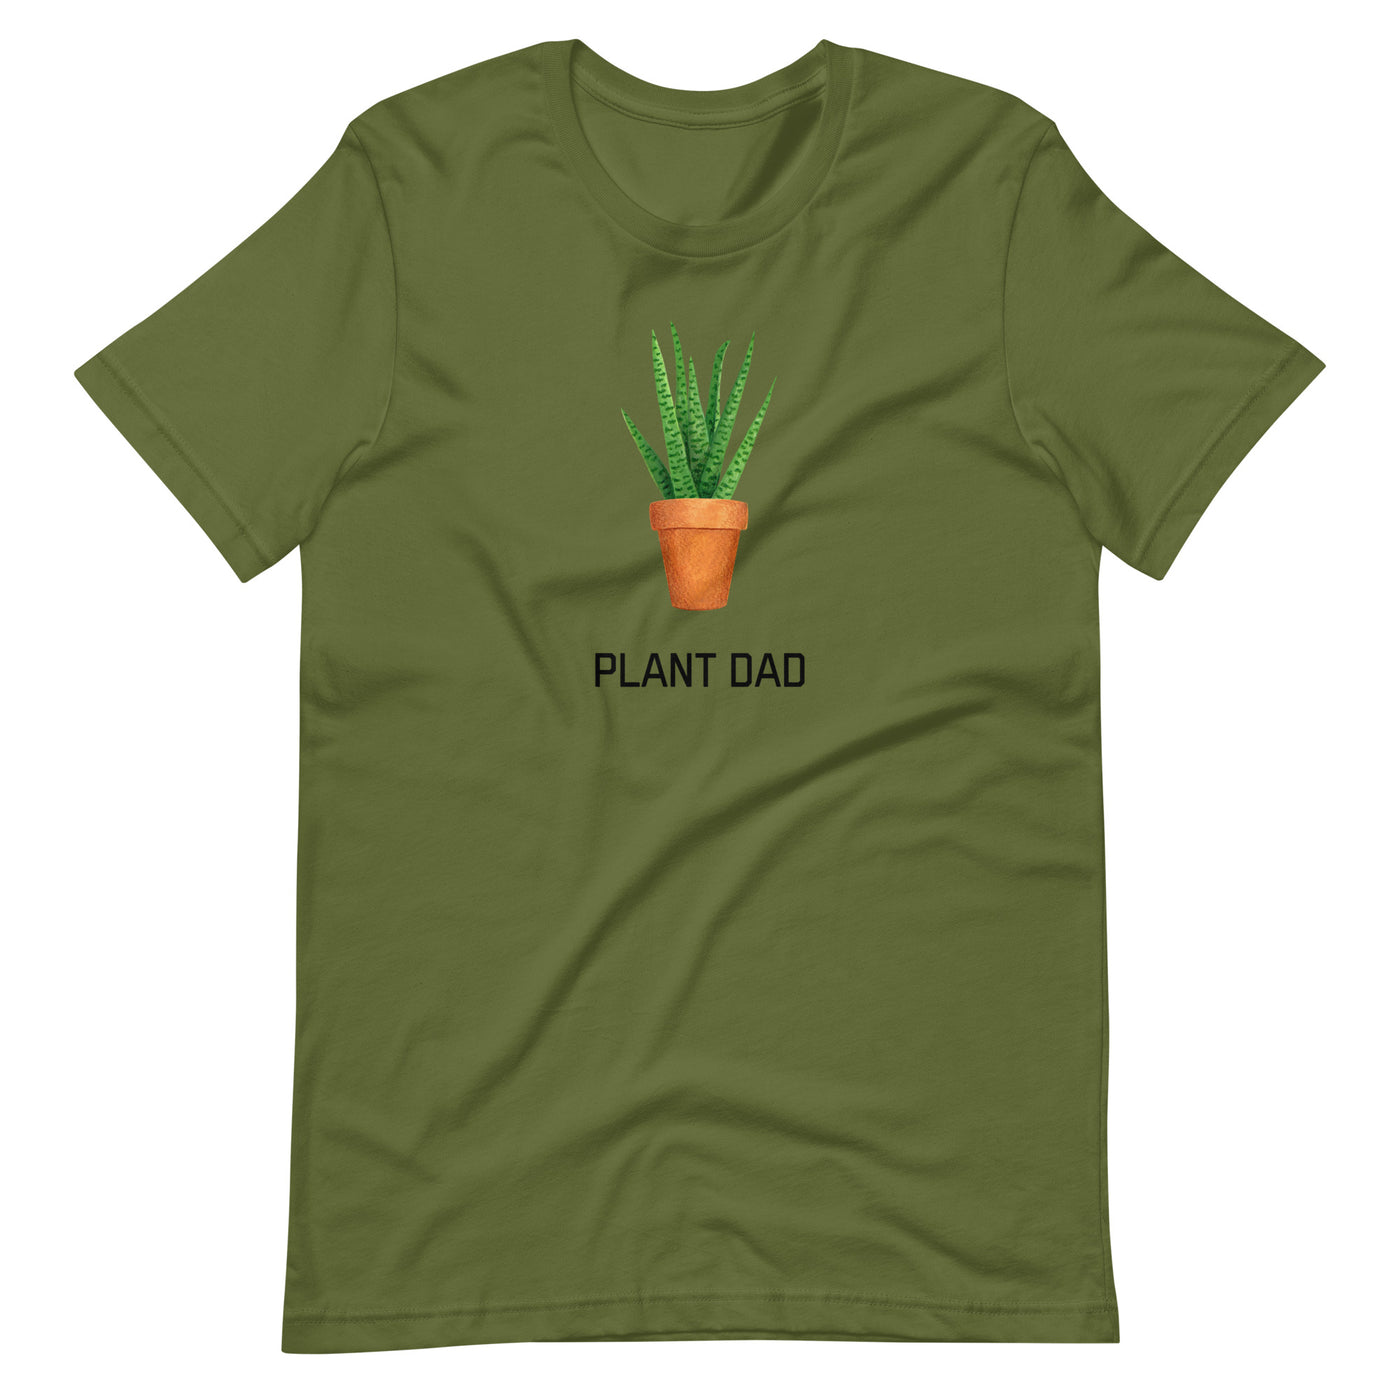 Plant Dad t-shirt